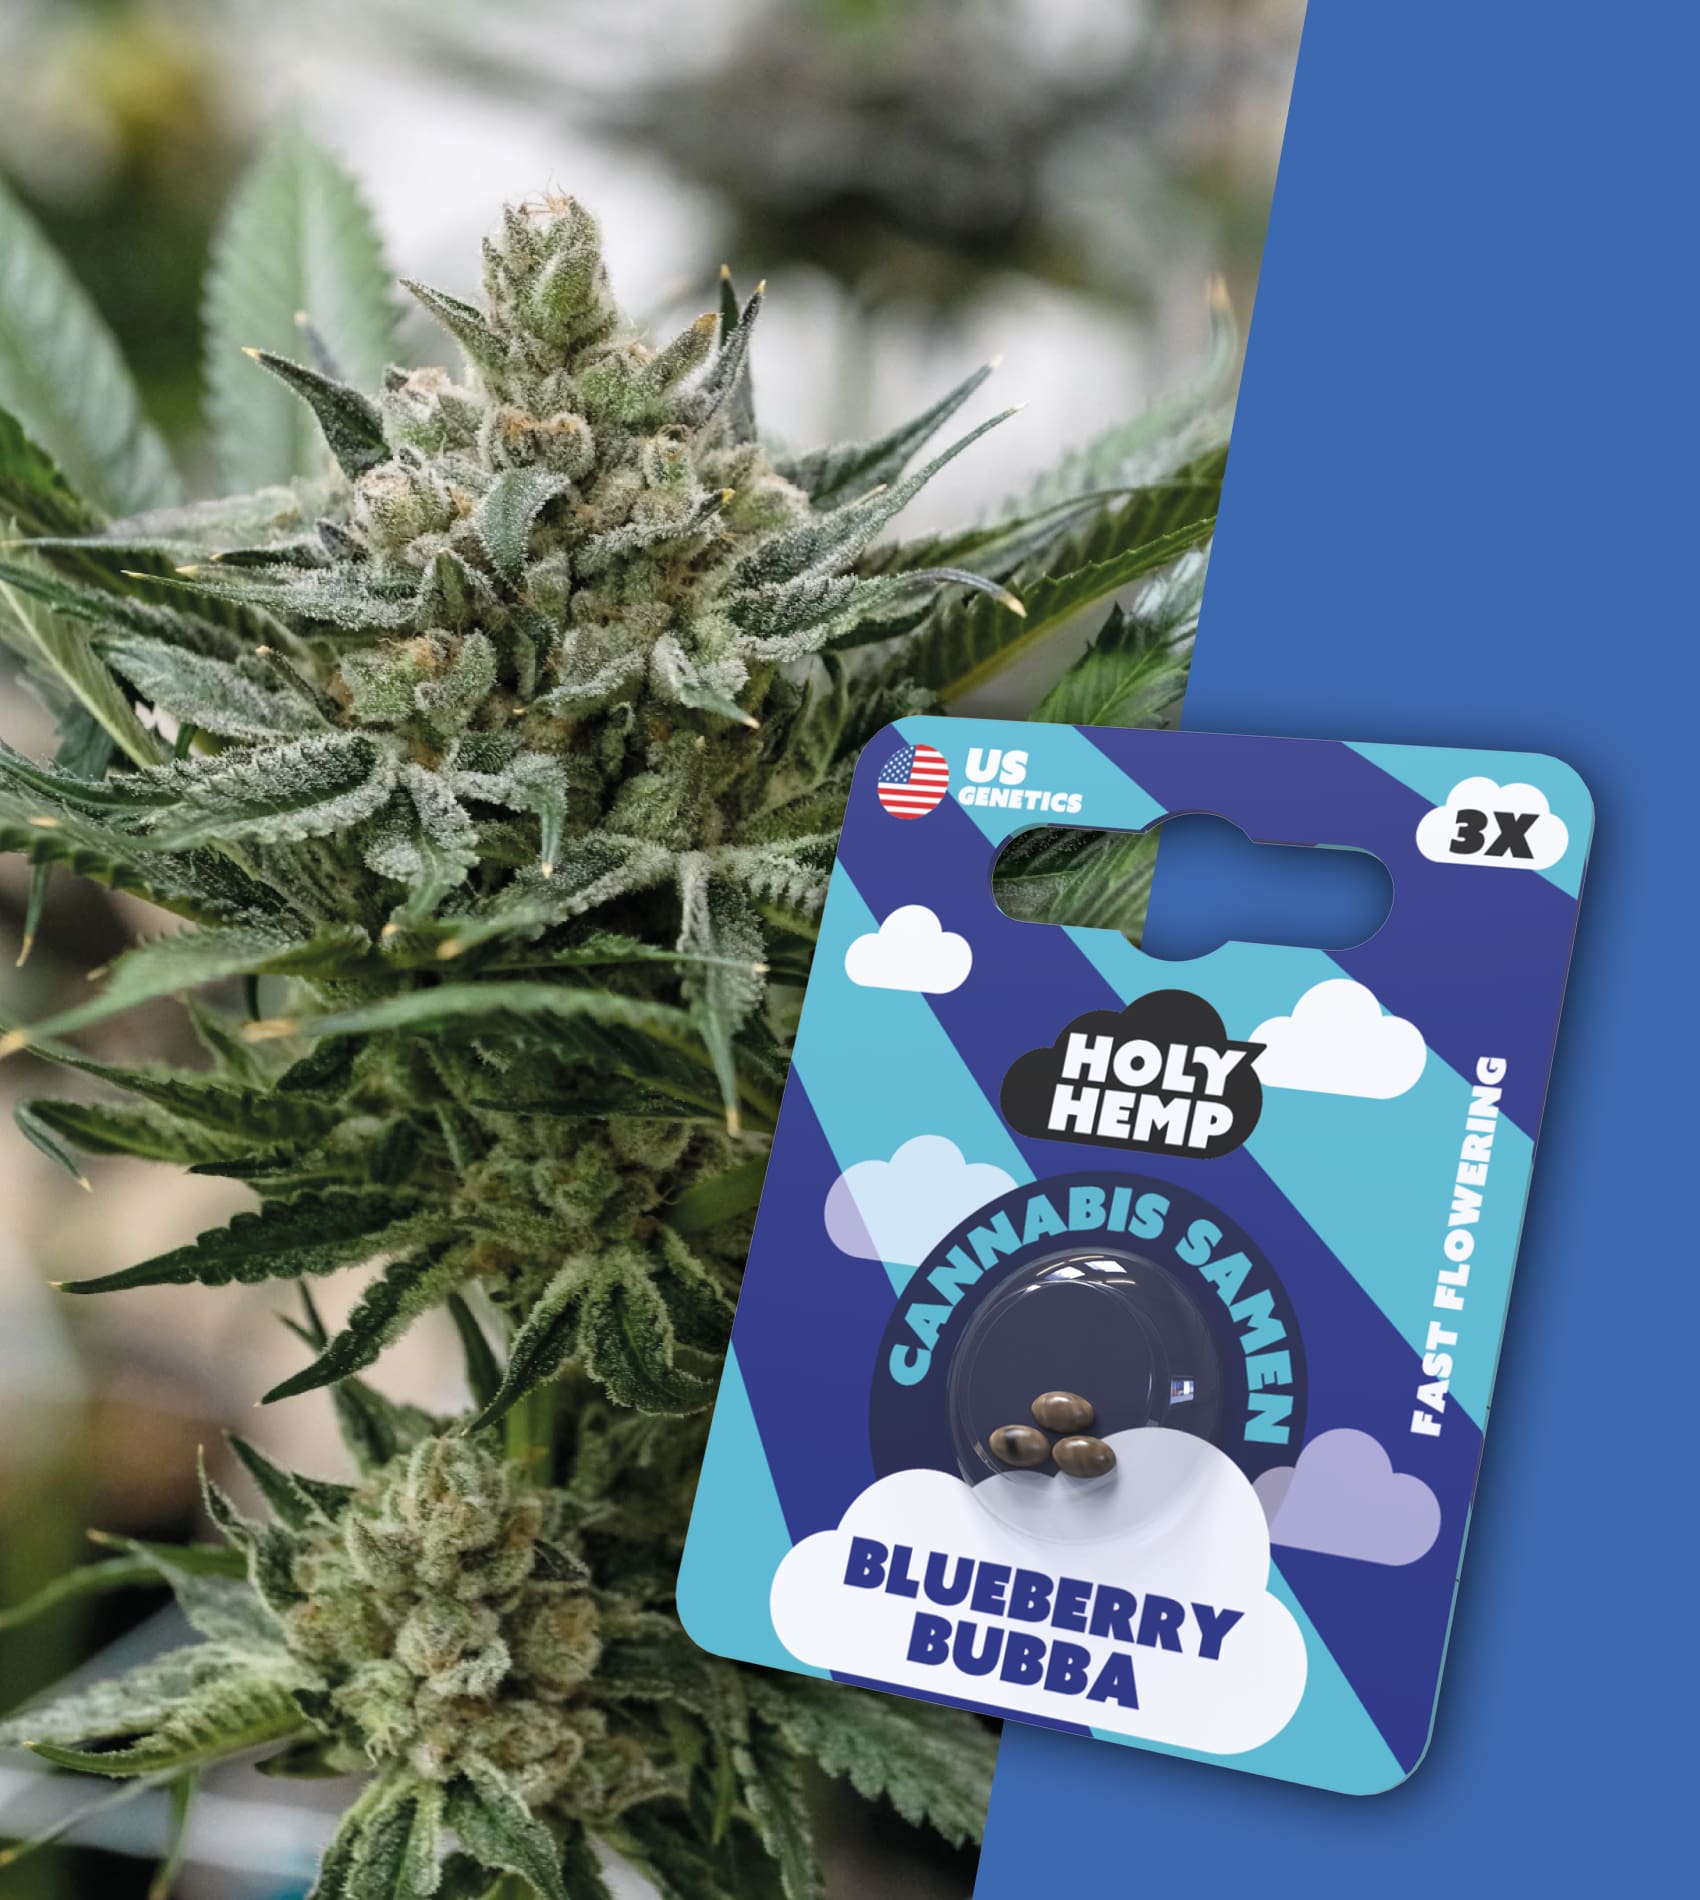 Holy Hemp Cannabissamen - Blueberry Bubba